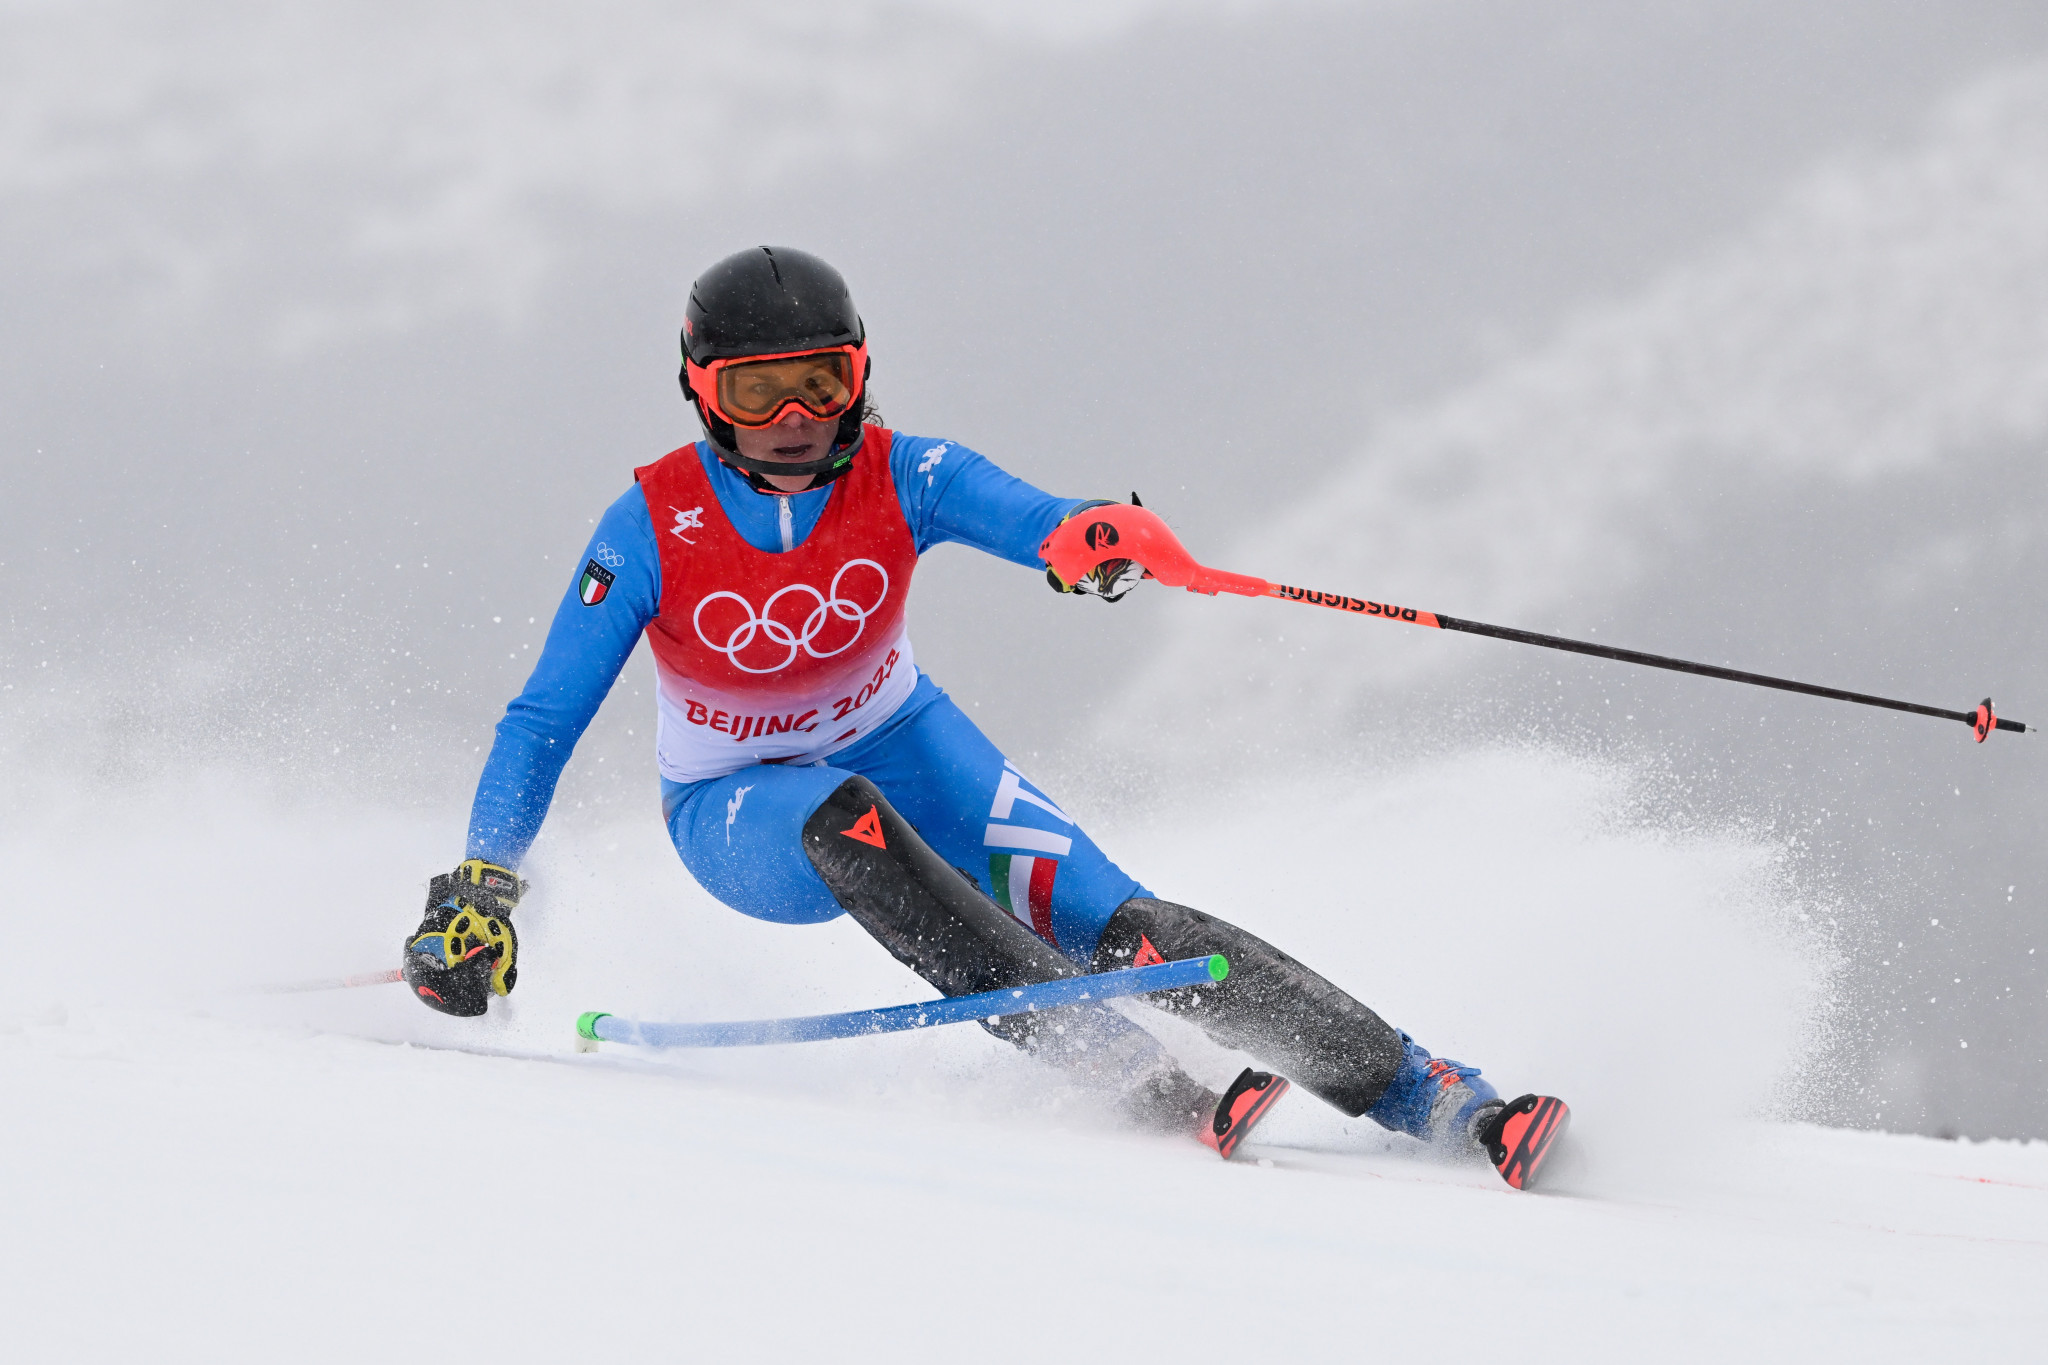 Italian skier warns "no Olympic spirit" at Milan Cortina 2026 because venues so spread out